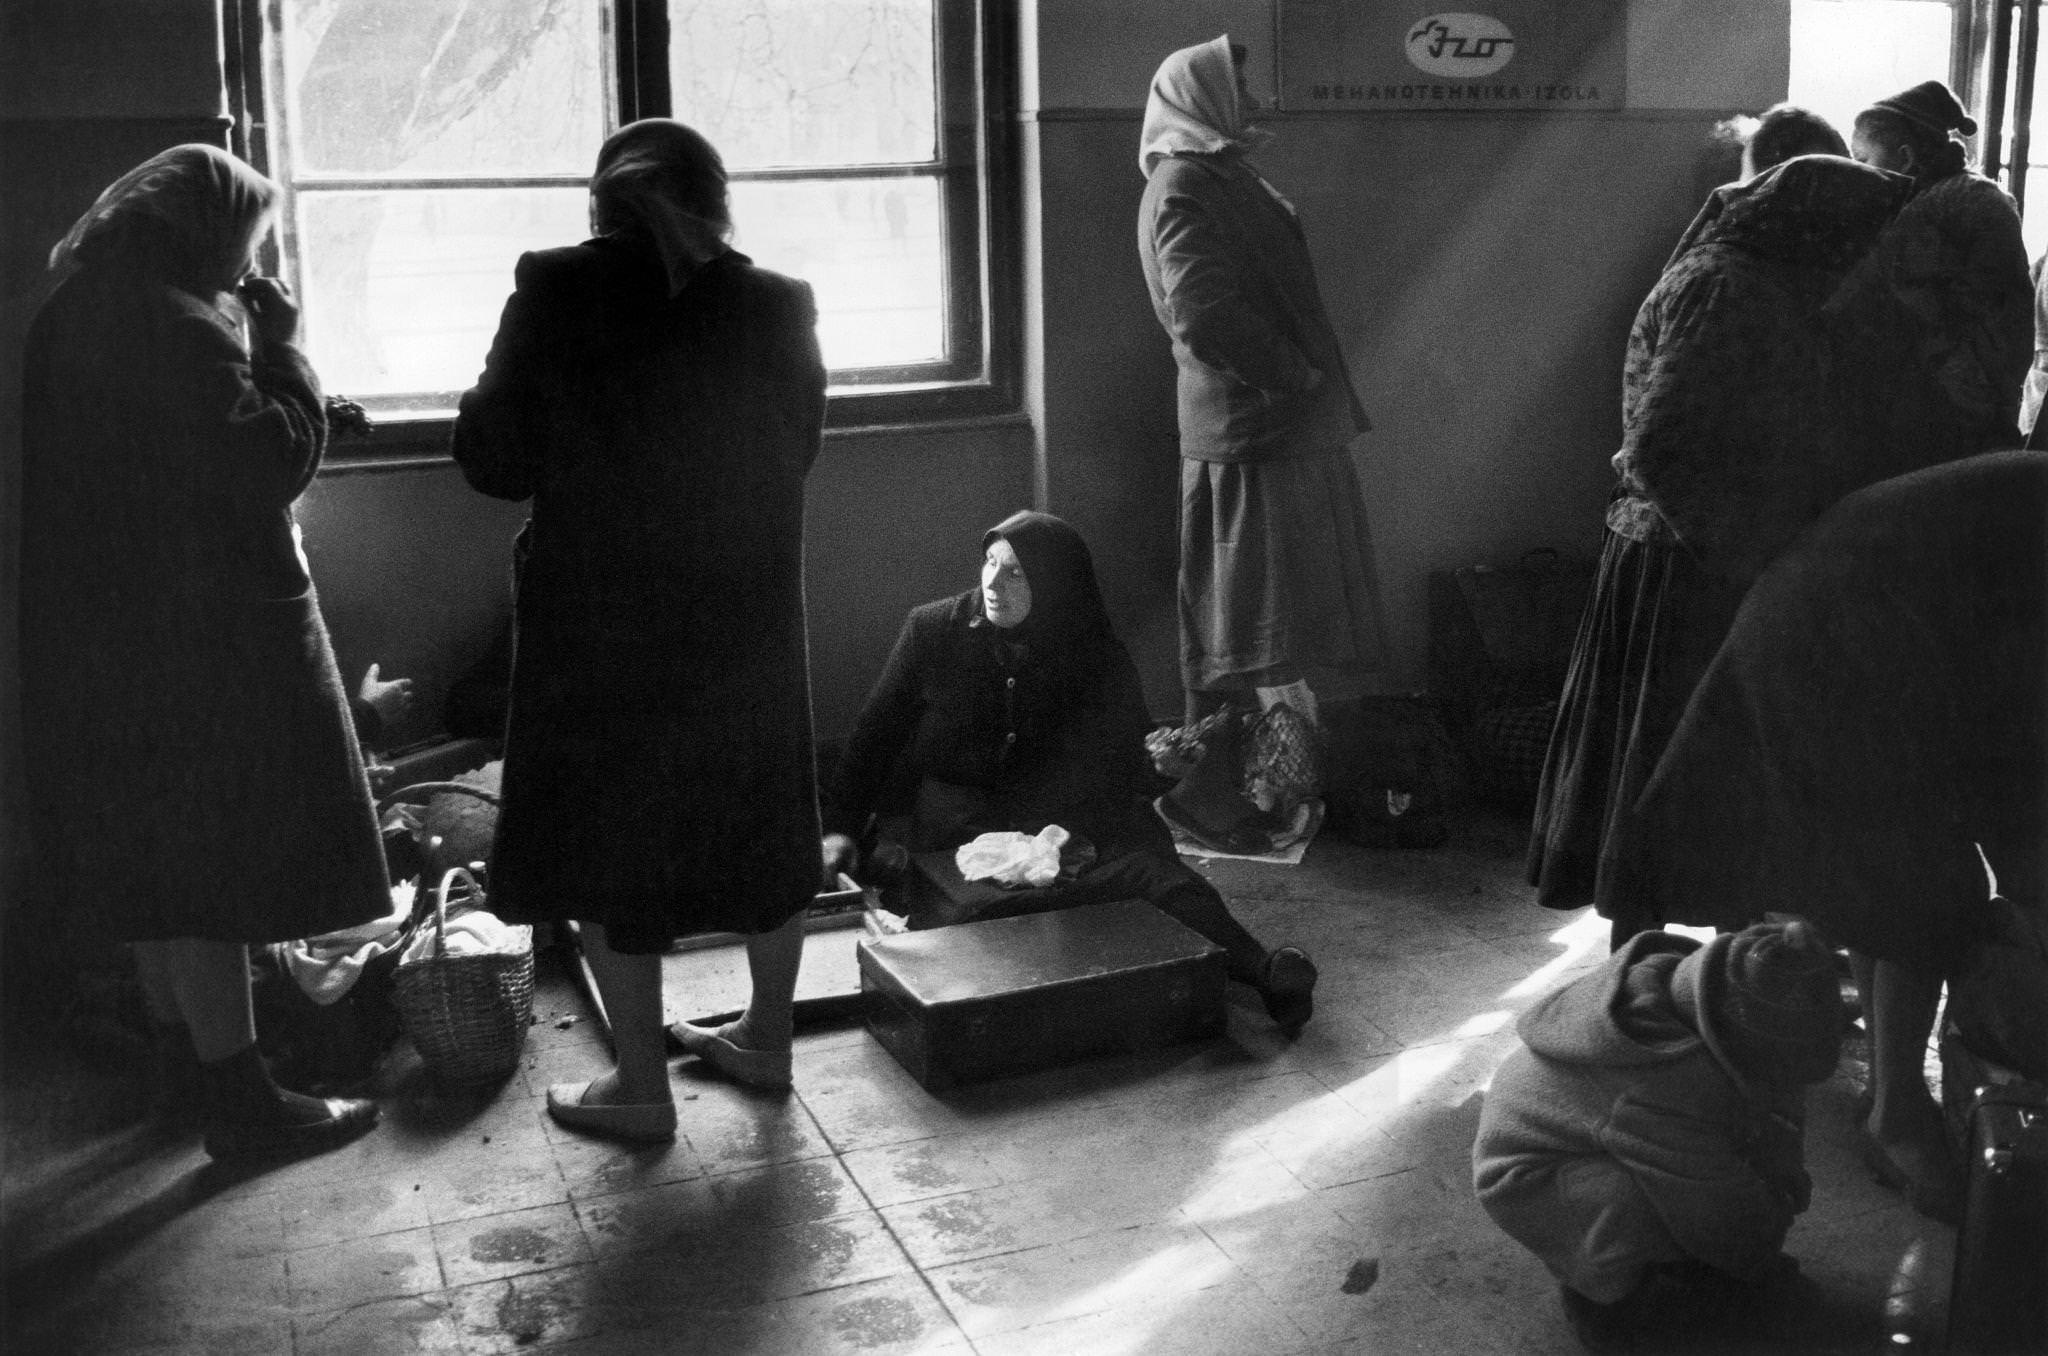 Some Yugoslav women waiting in the waiting room of Belgrade railway station, Serbia, 1965